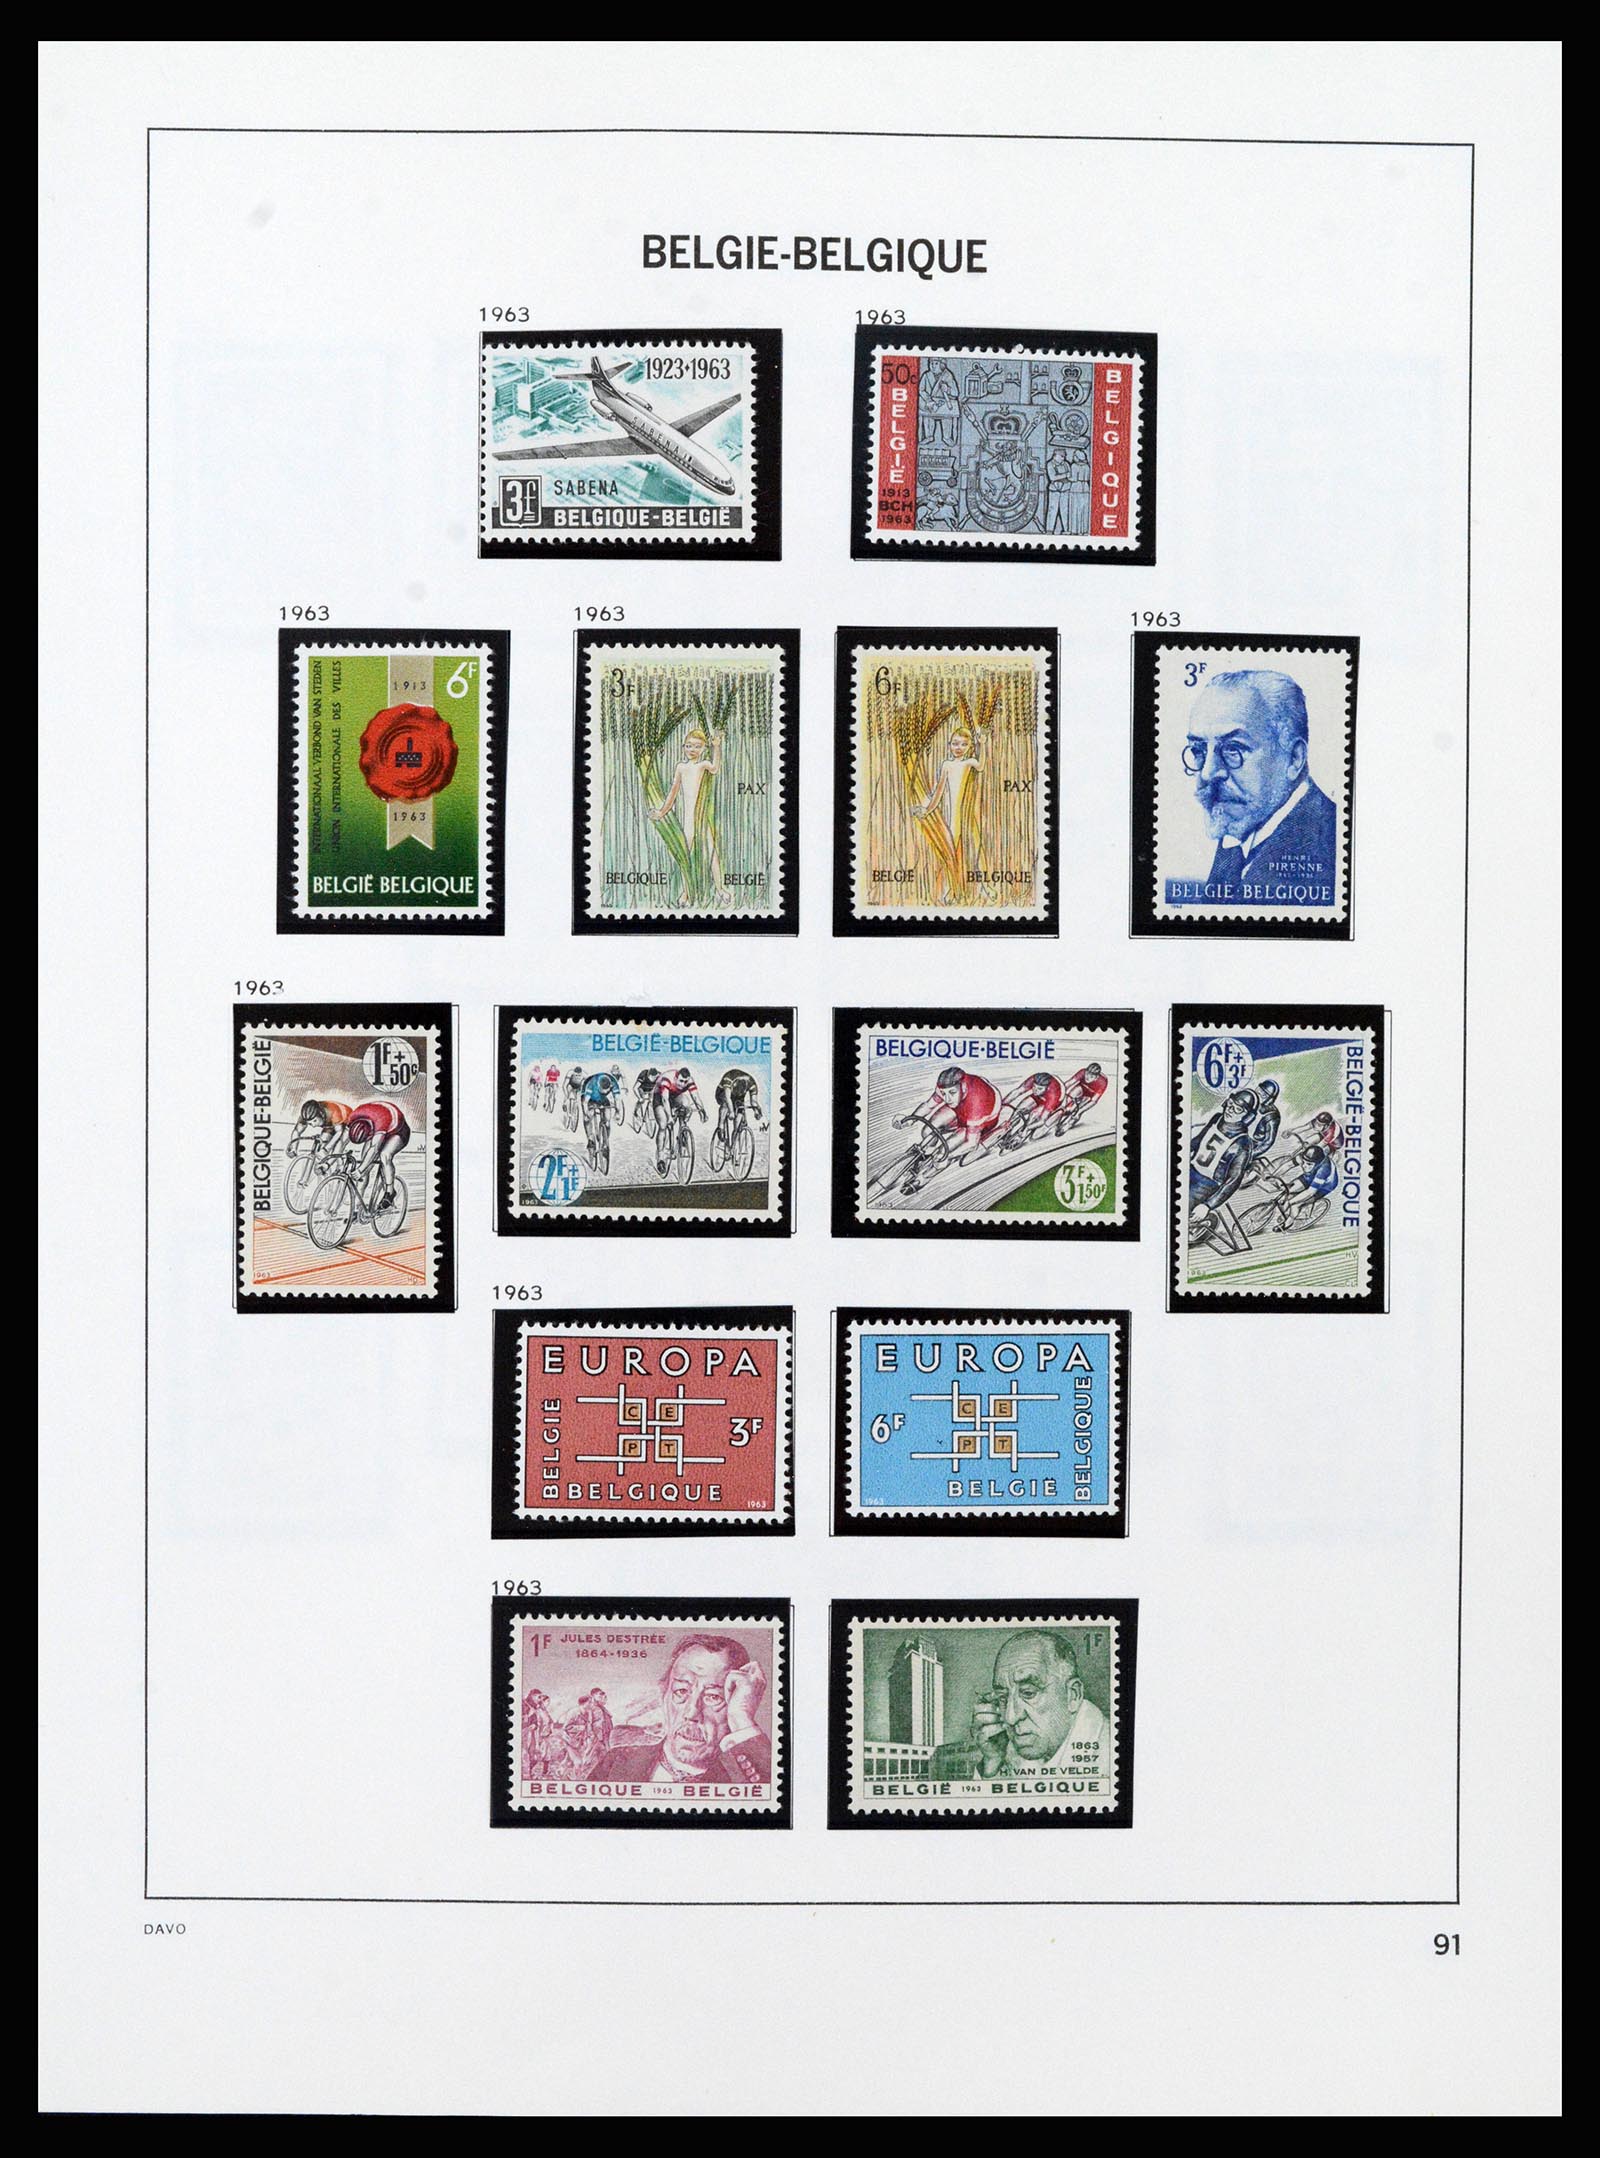 37189 093 - Stamp collection 37189 Belgium 1849-2006.